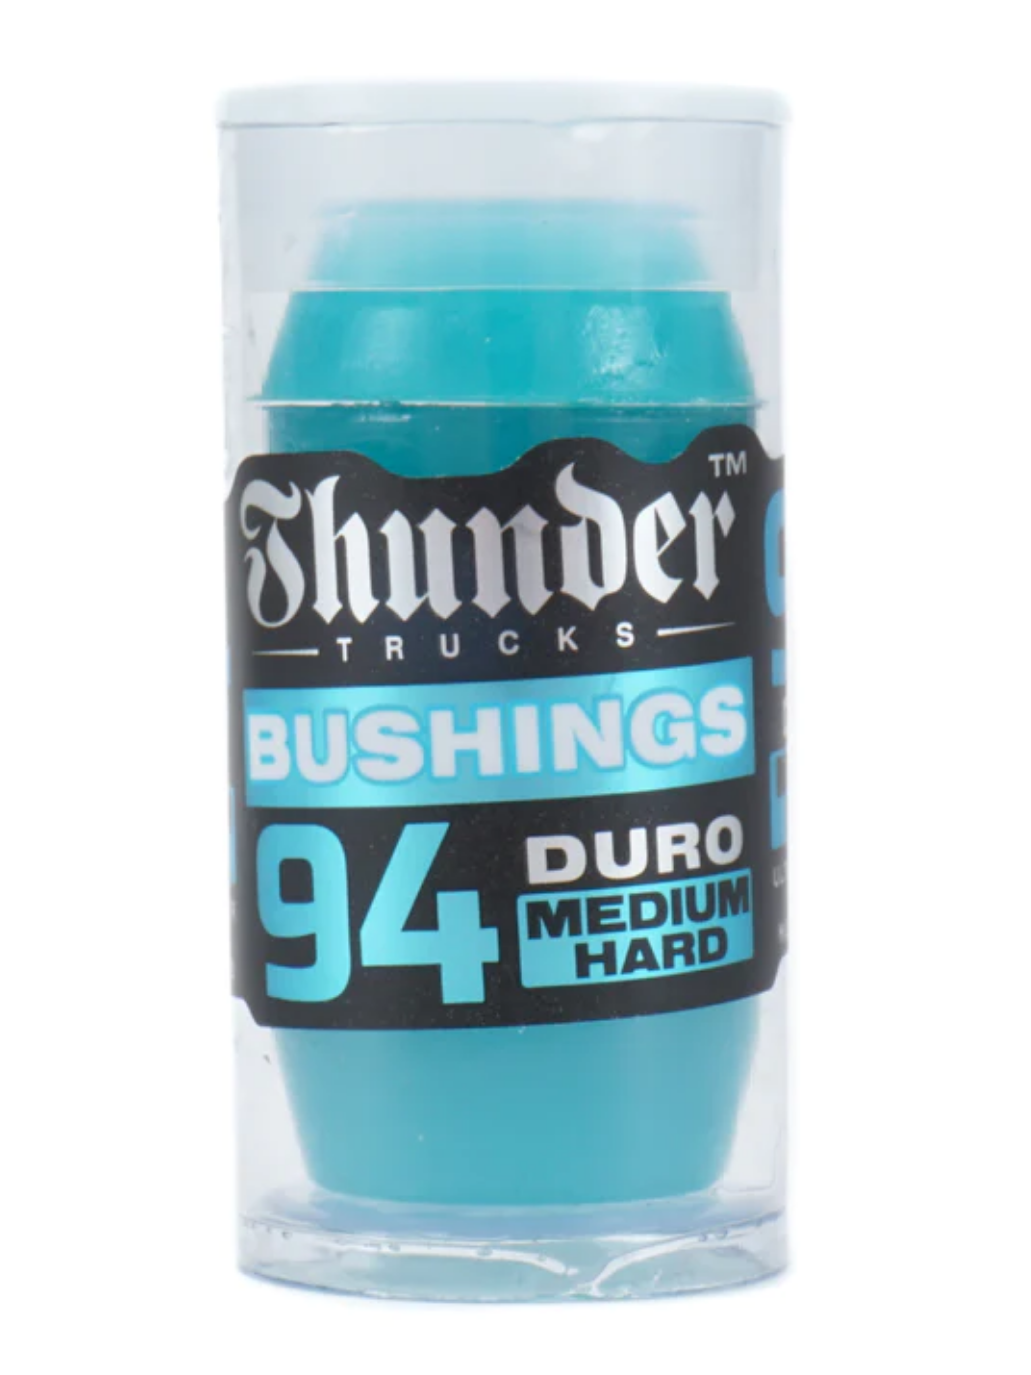 Caoutchoucs d'essieu Thunder Premium 94A Bushings (Bleu ciel)